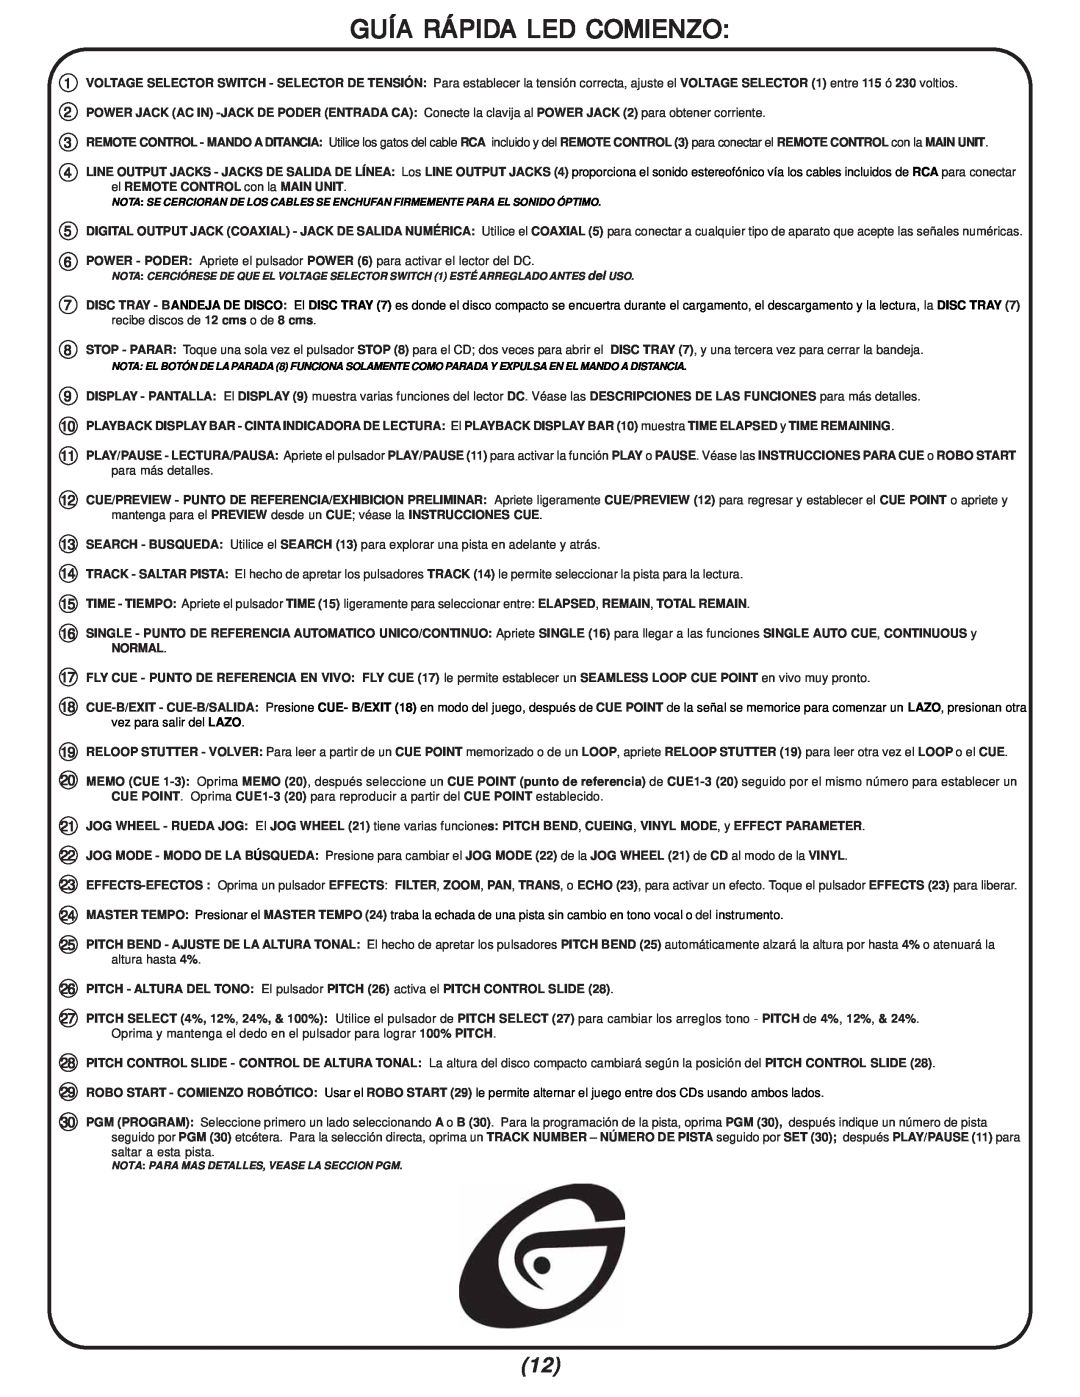 Gemini CFX-40 manual Guía Rápida Led Comienzo 